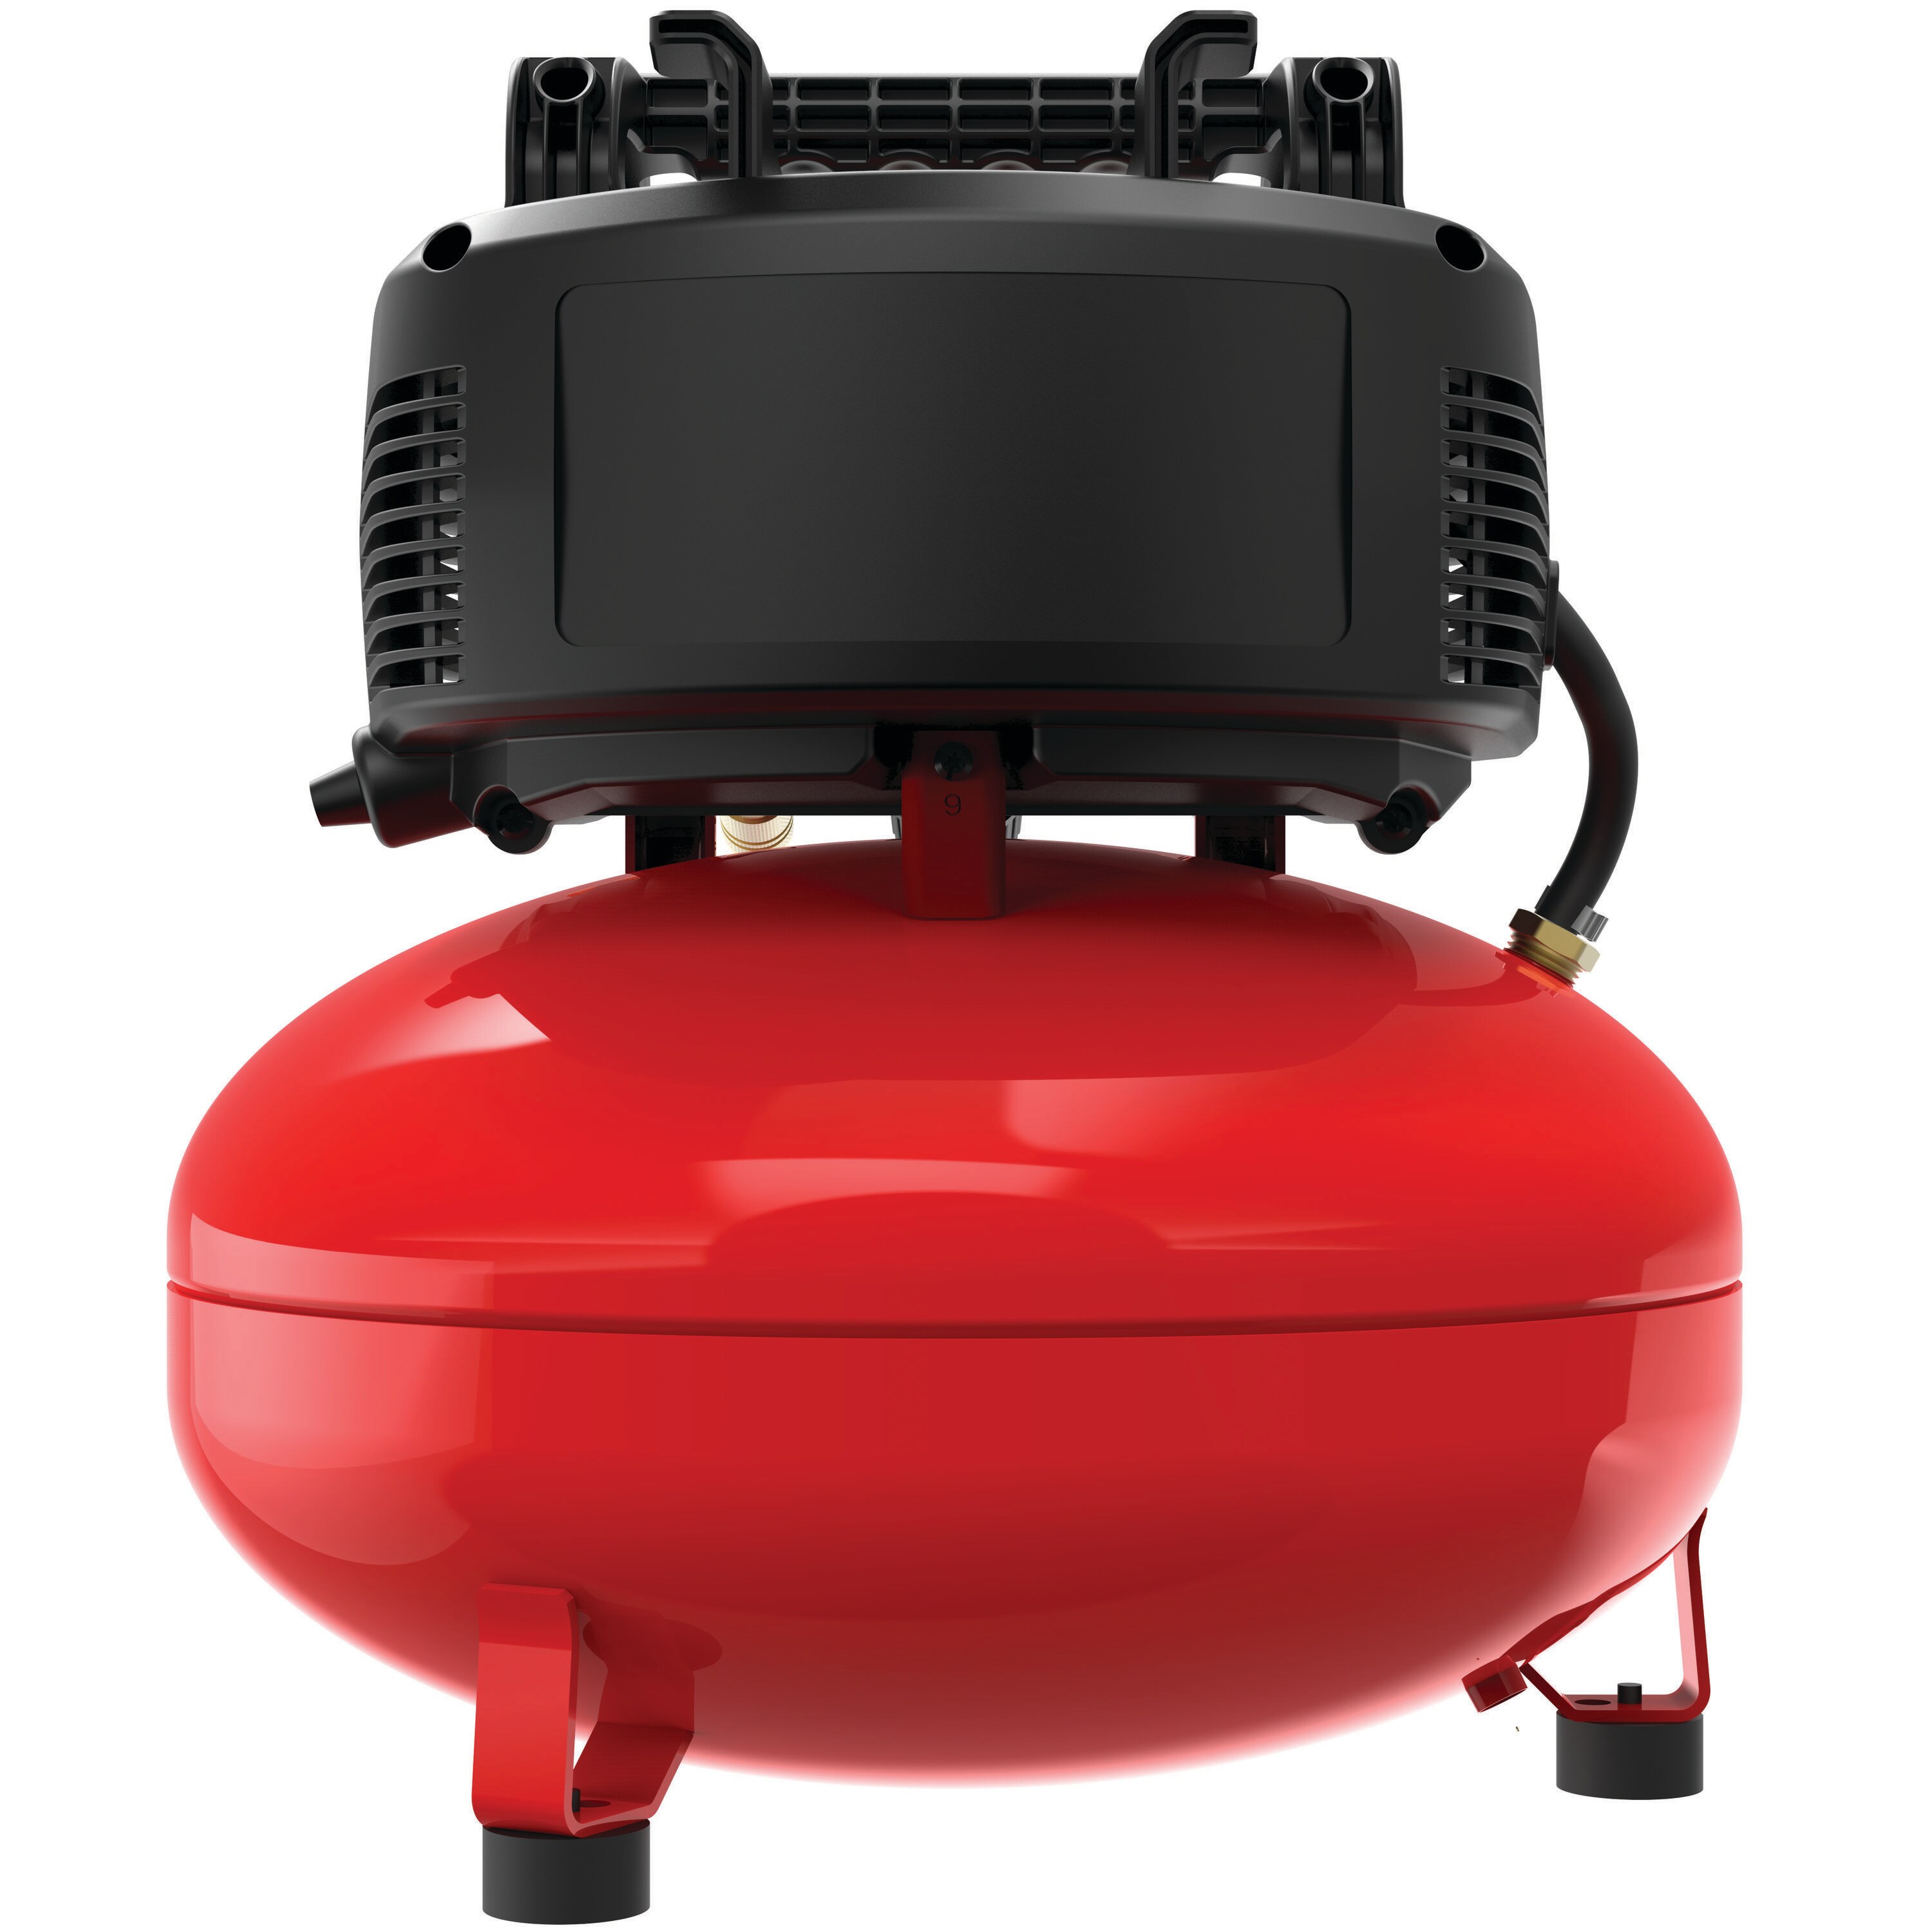 Details about   CRAFTSMAN Air Compressor 6 gallon Pancake Oil-Free 150 PSI 13 Piece Kit Portable 